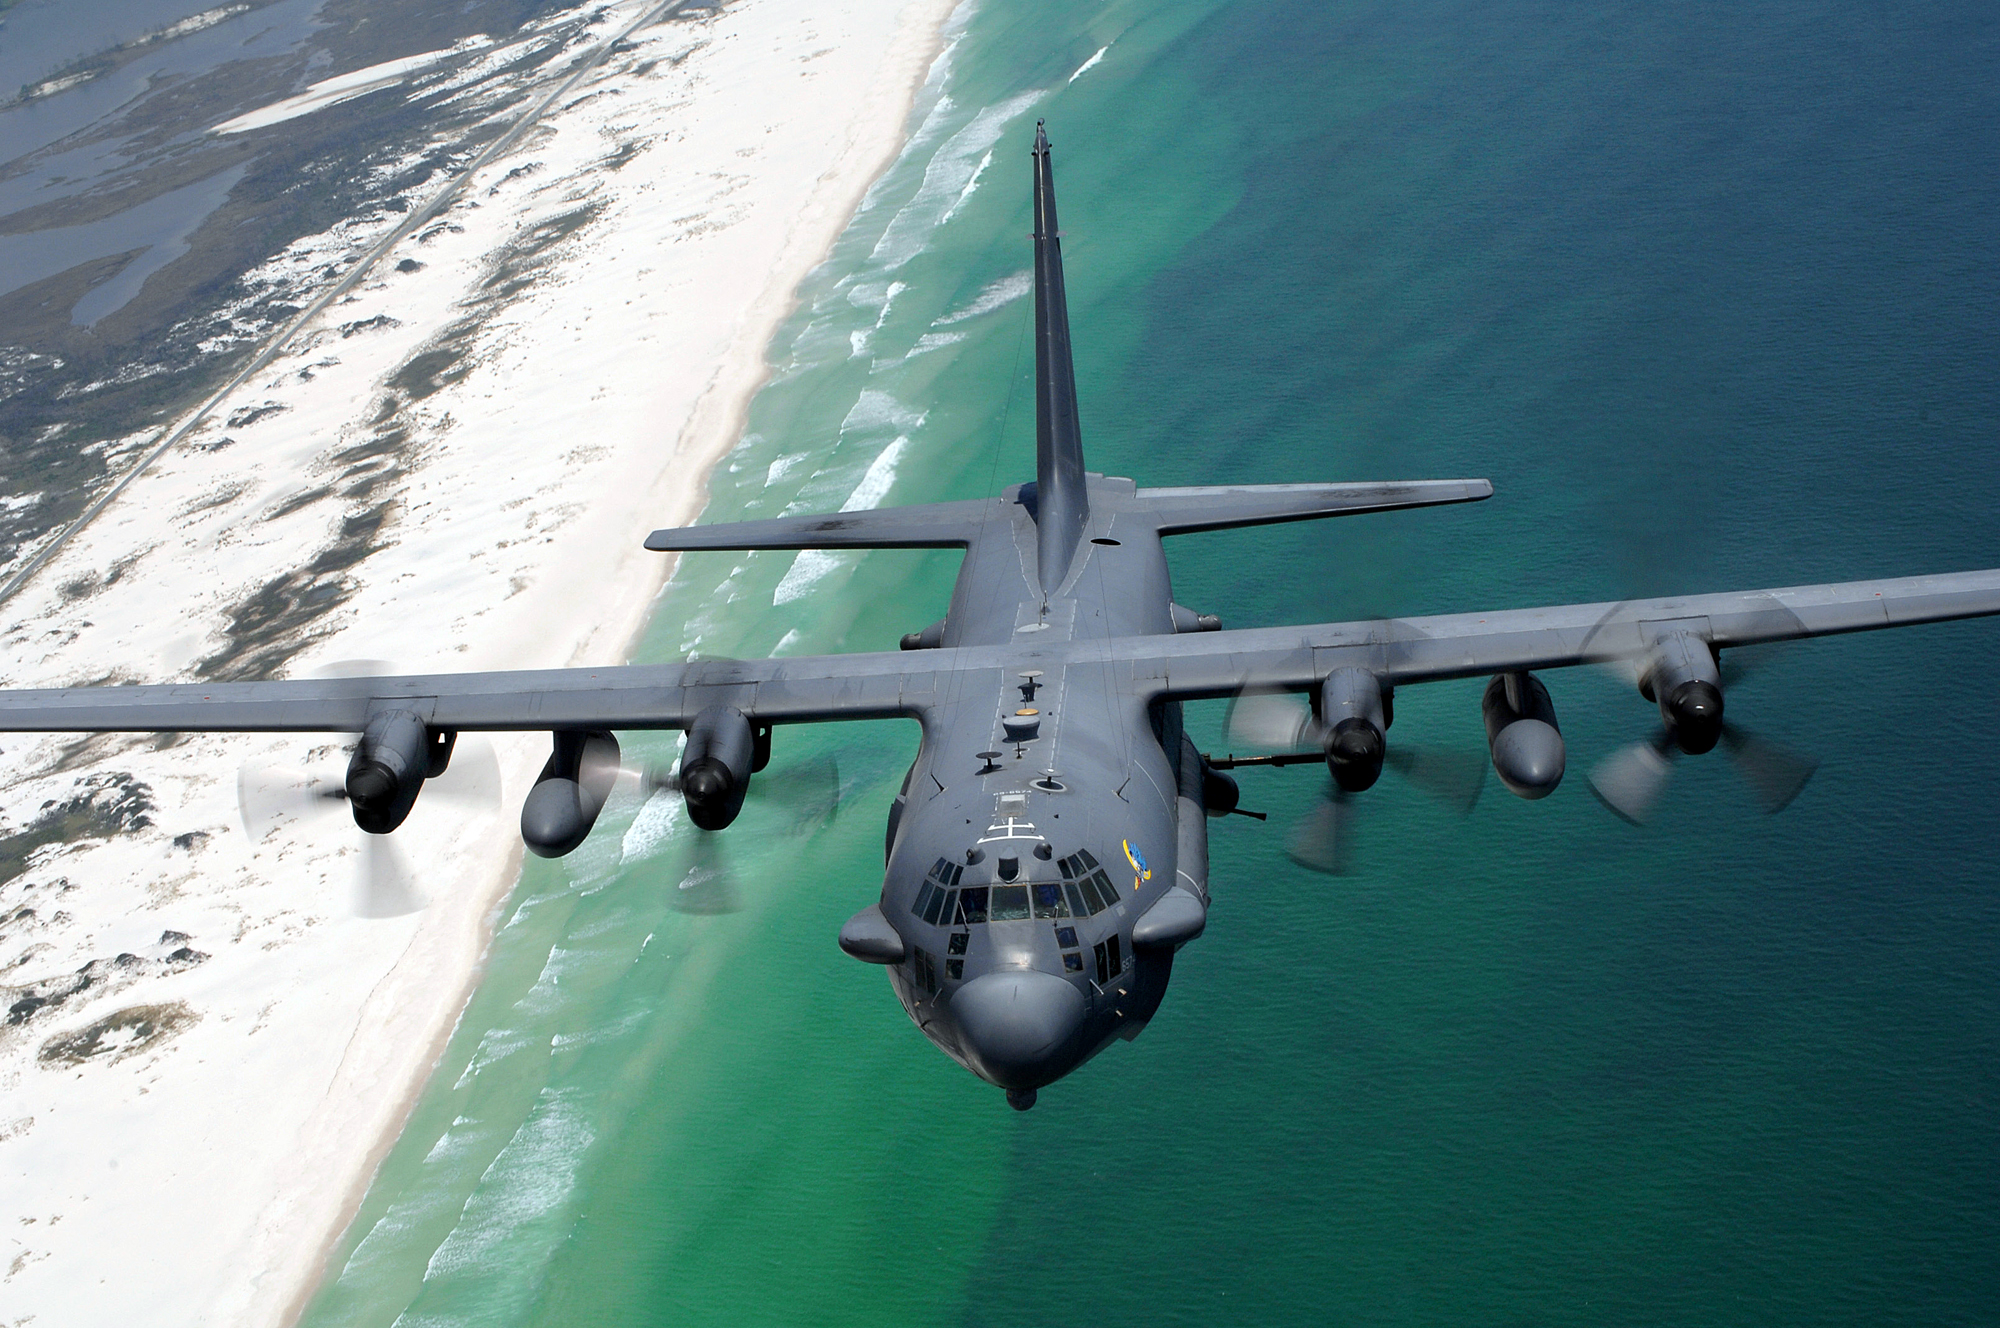          Lockheeds AC-130H Spectre Gunship
AC-130H Spectre over the Florida coast